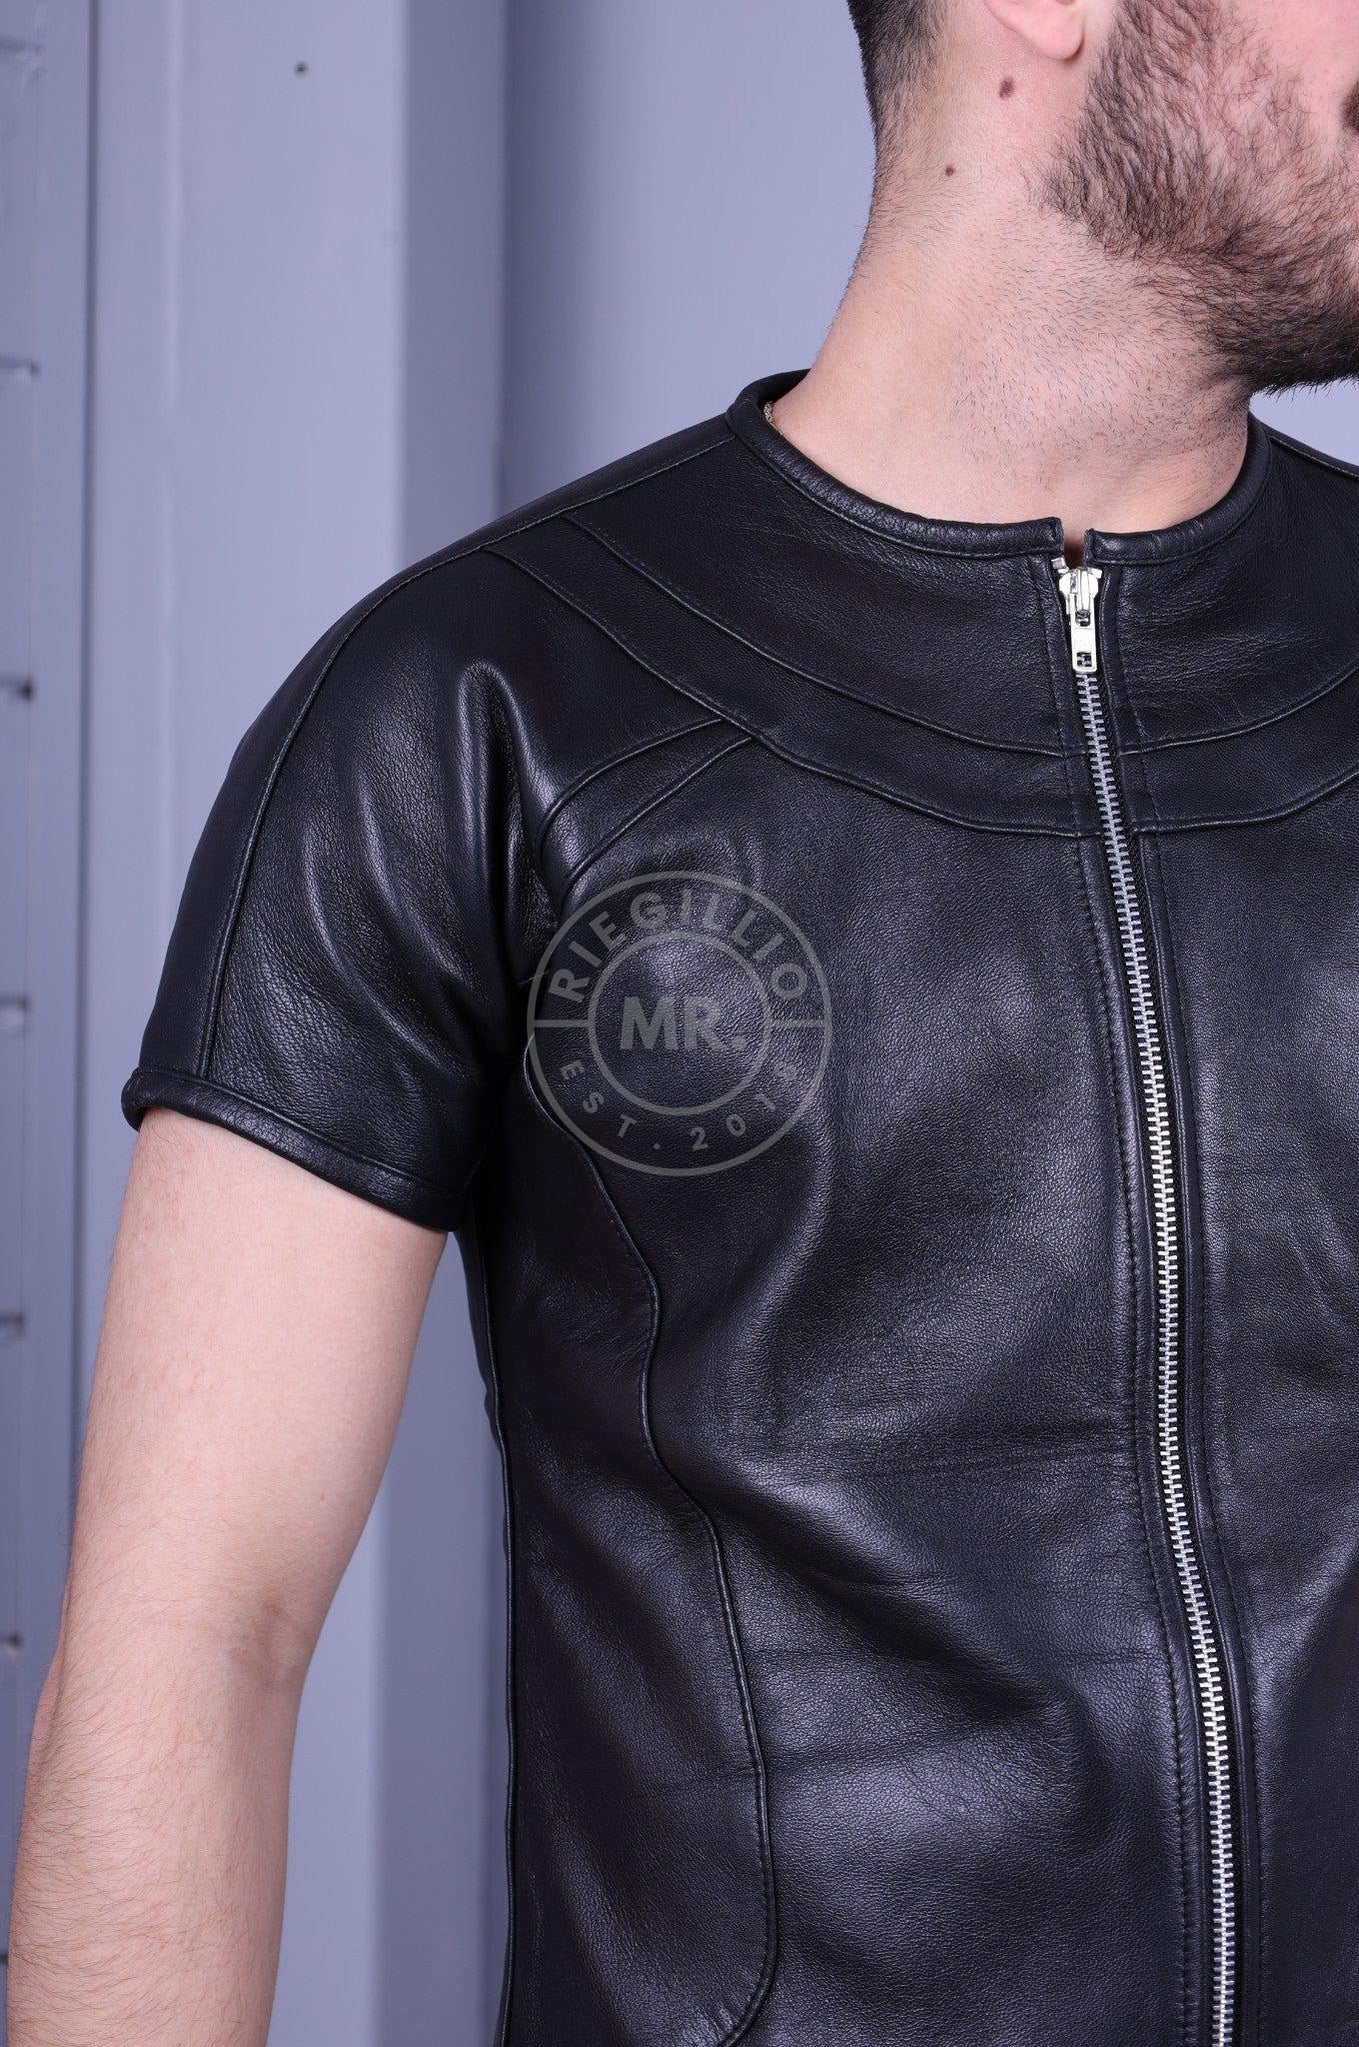 Leather Biker Shirt - Black *DISCONTINUED ITEM* at MR. Riegillio